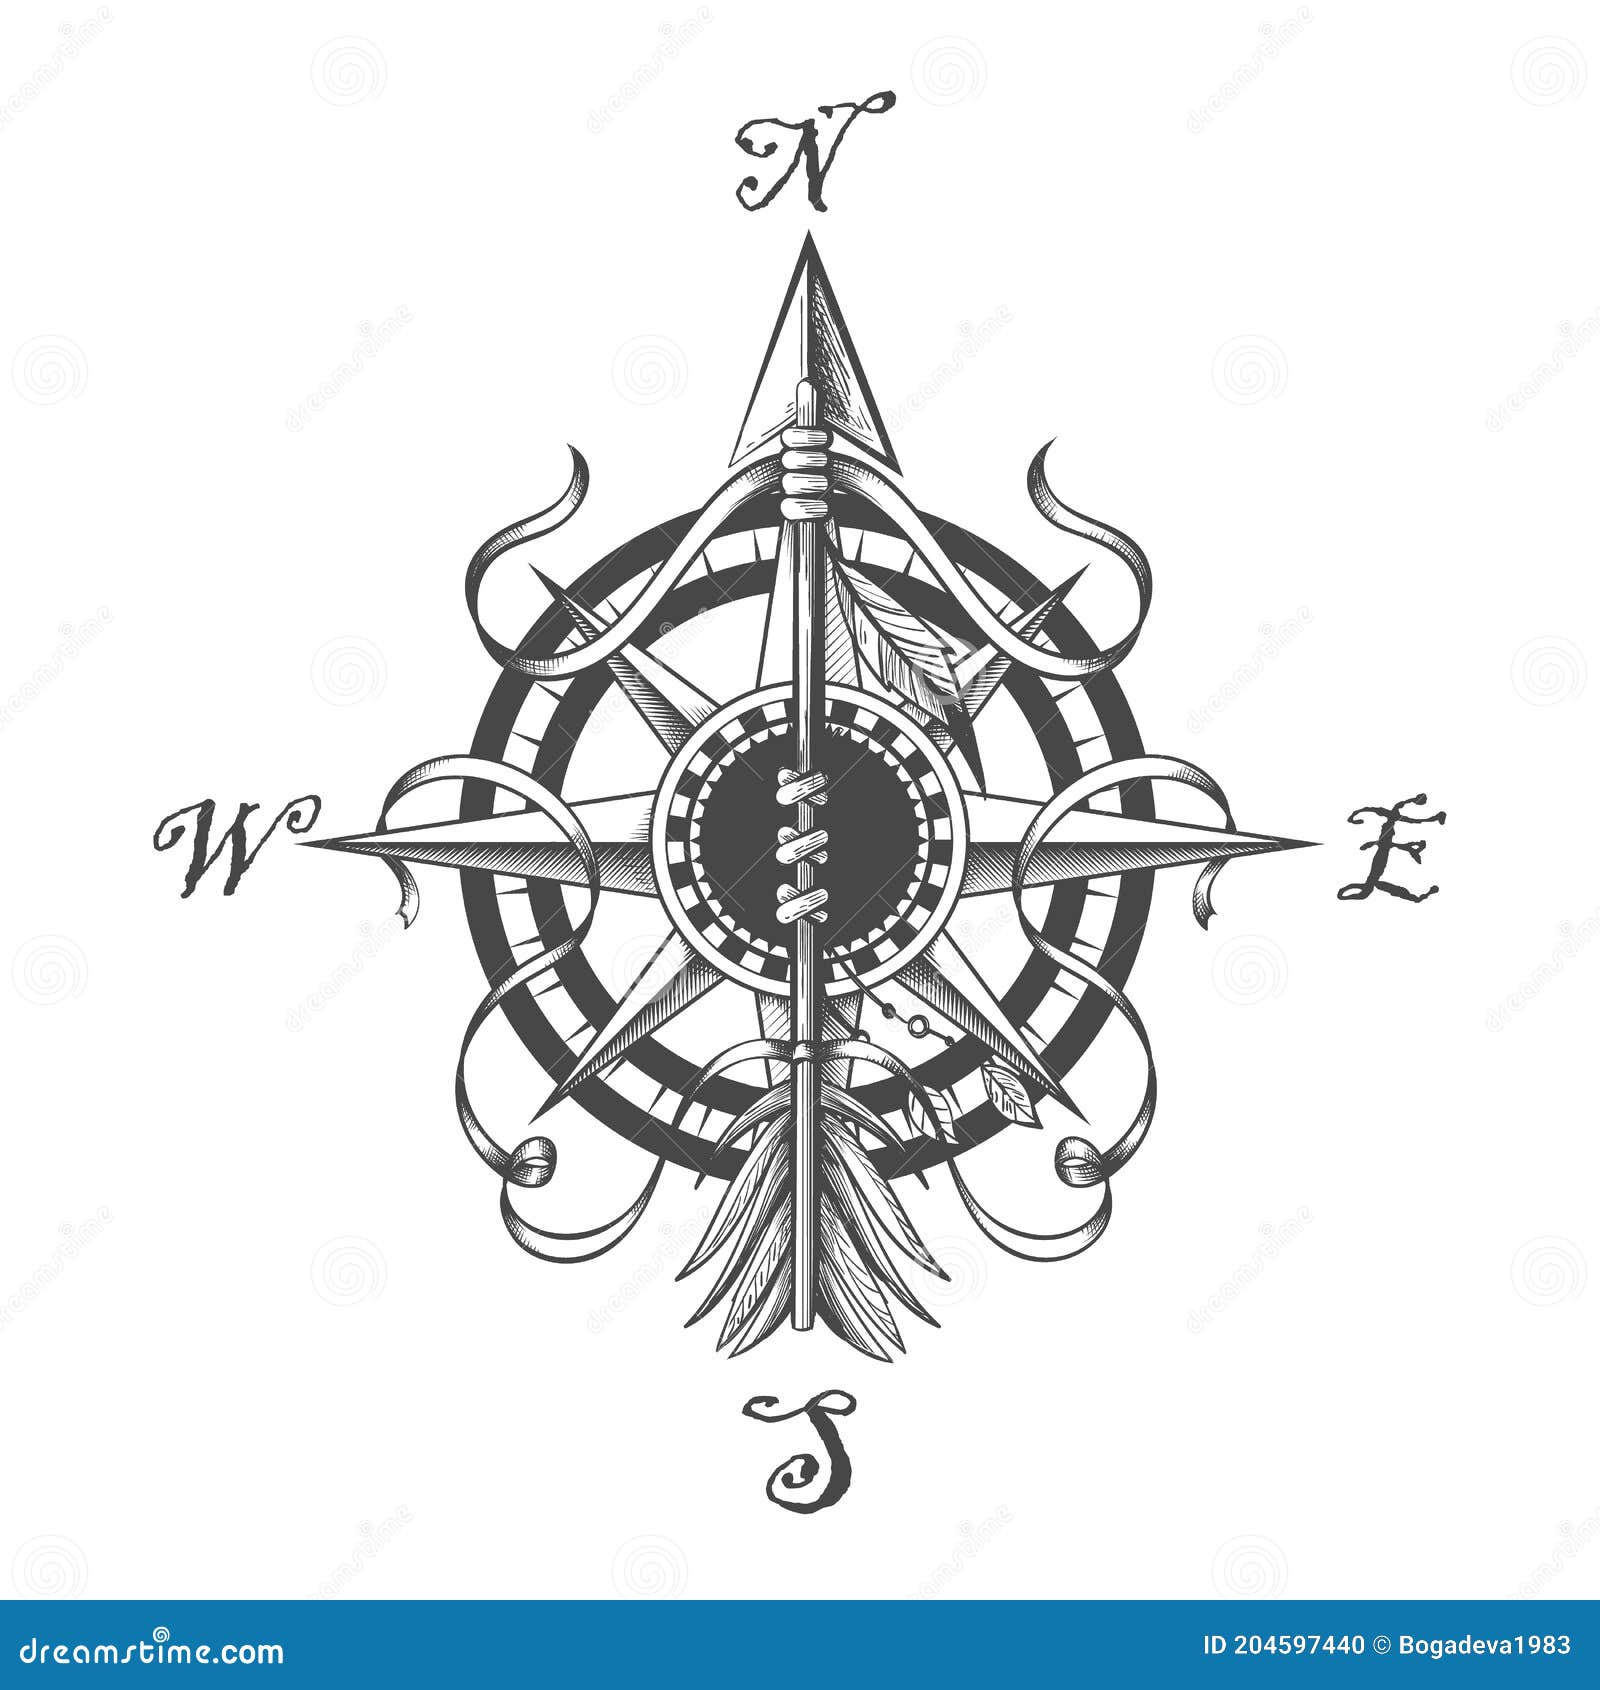 Discover 82 compass arrow tattoo stencil super hot  thtantai2